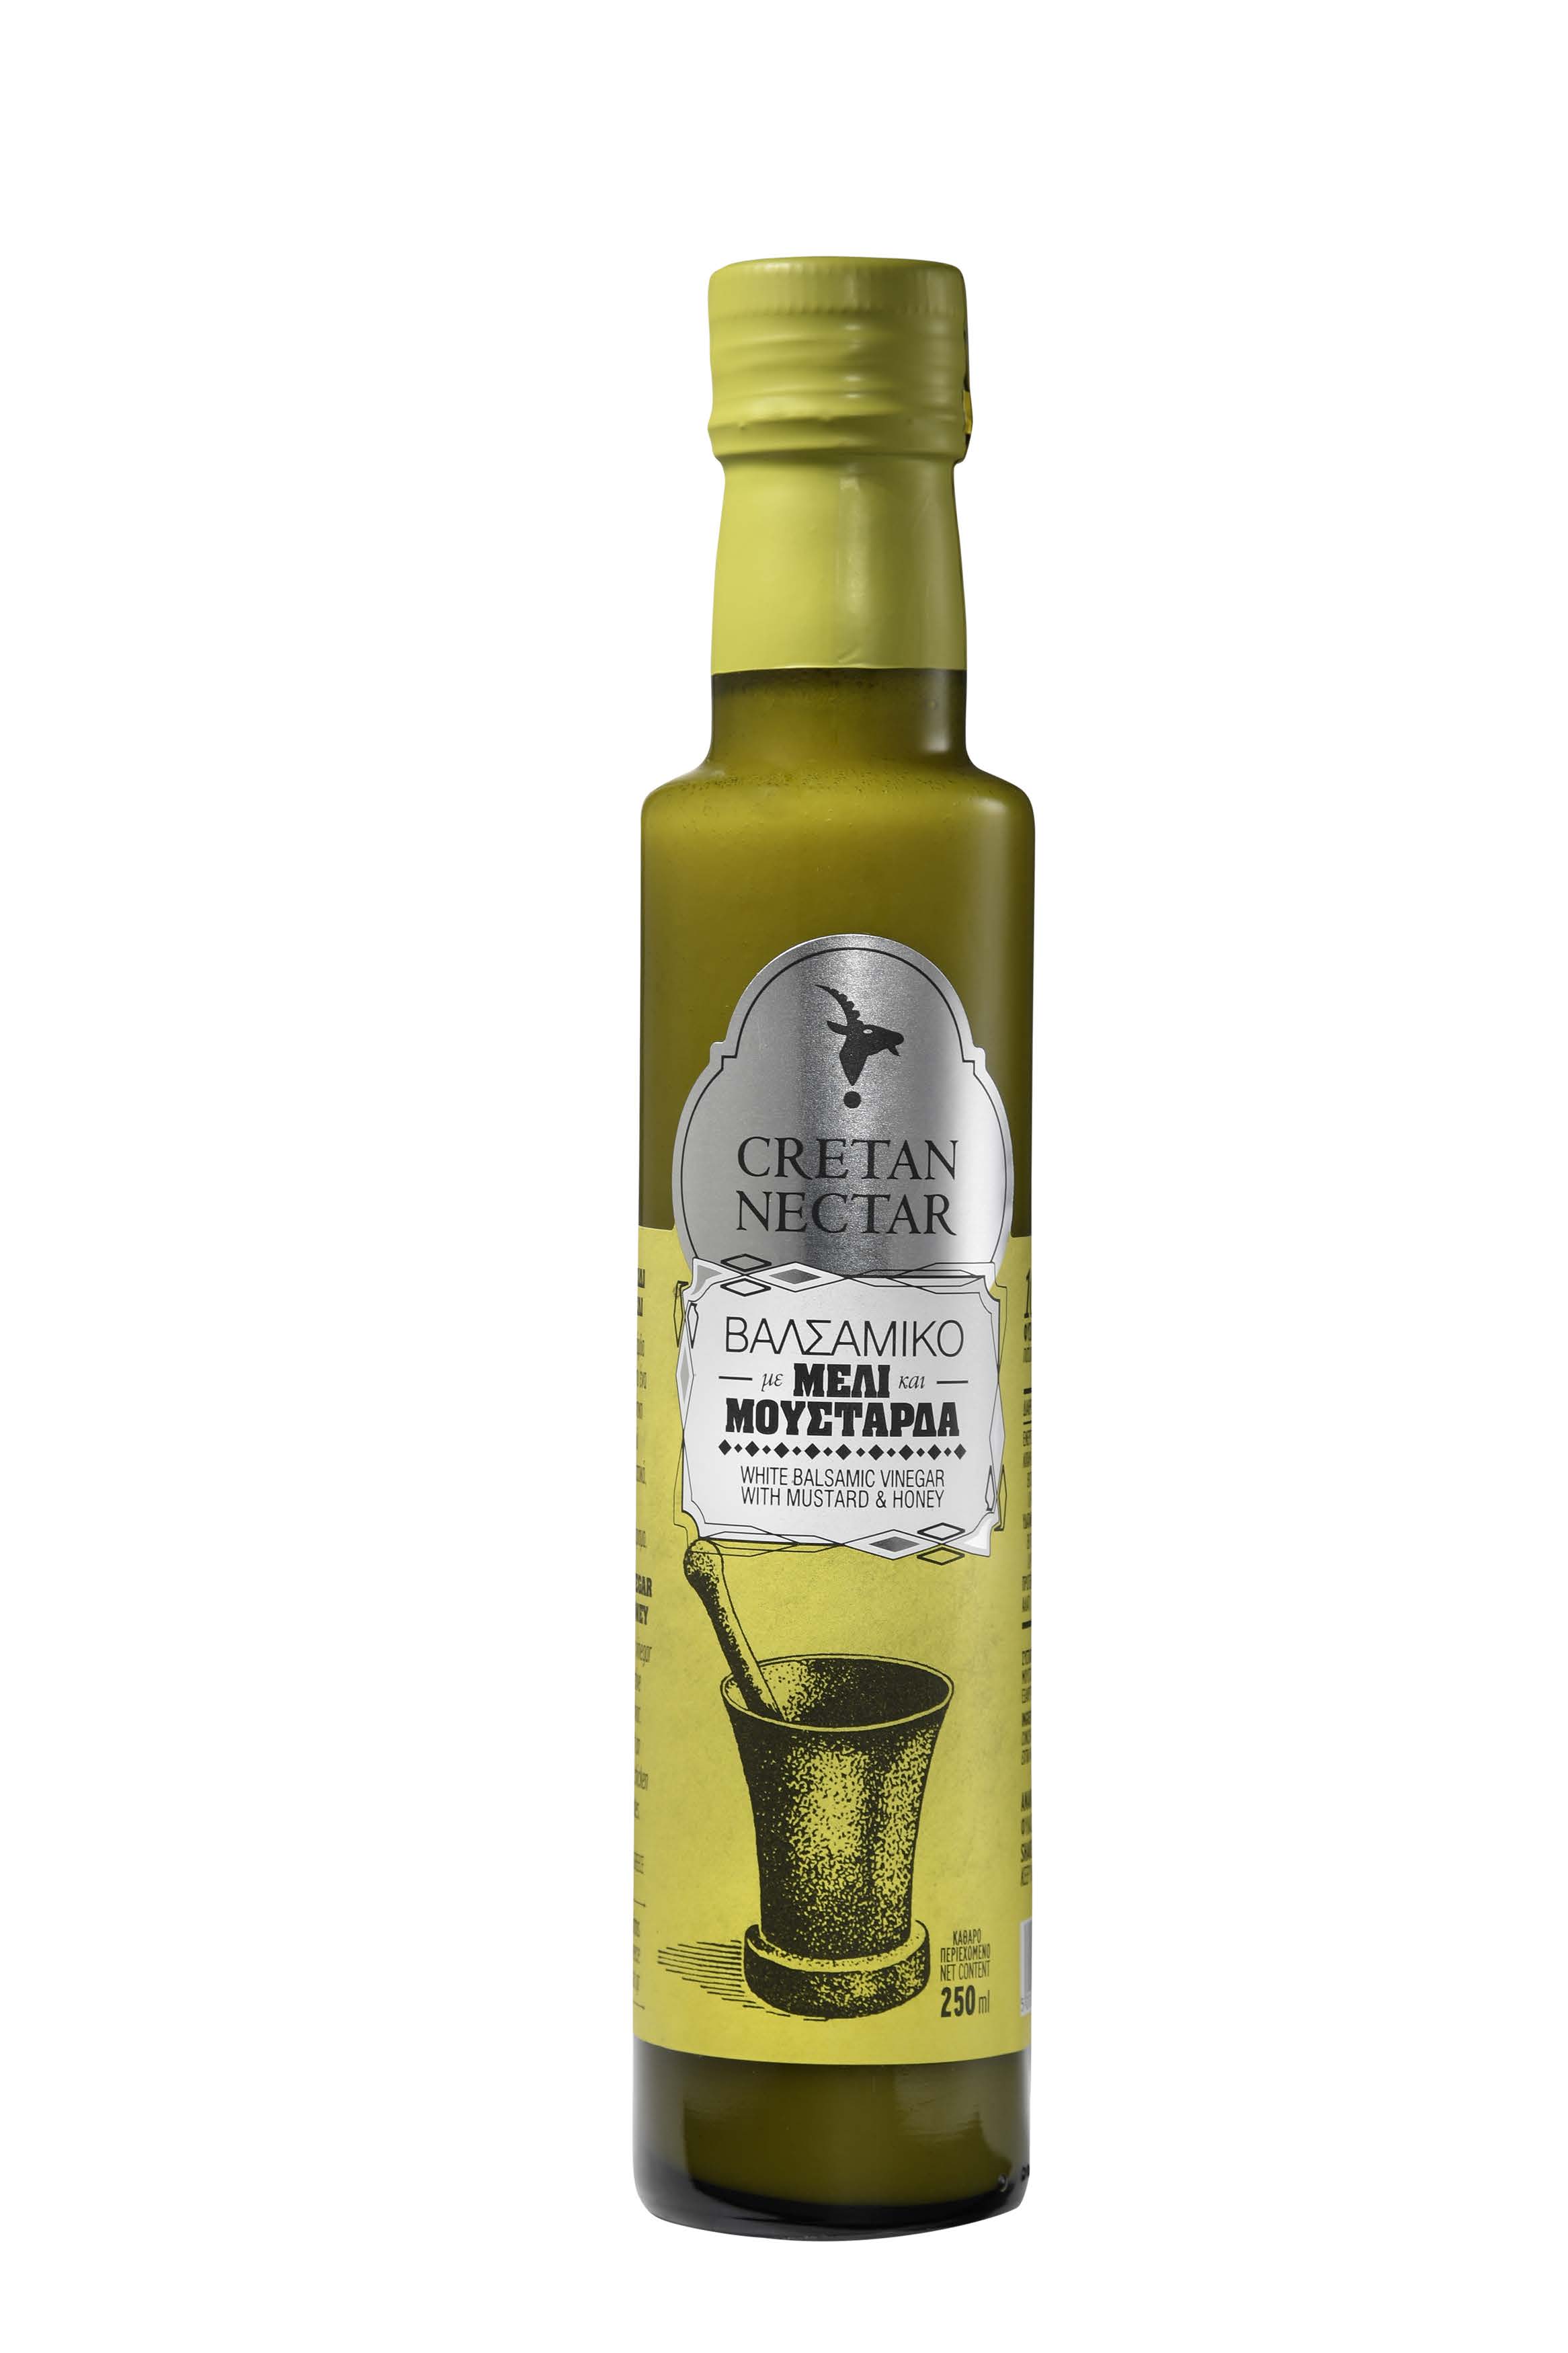 B2 Cabas Greece for Cretan nectar balsamic vinegar with mustard and honey 250ml